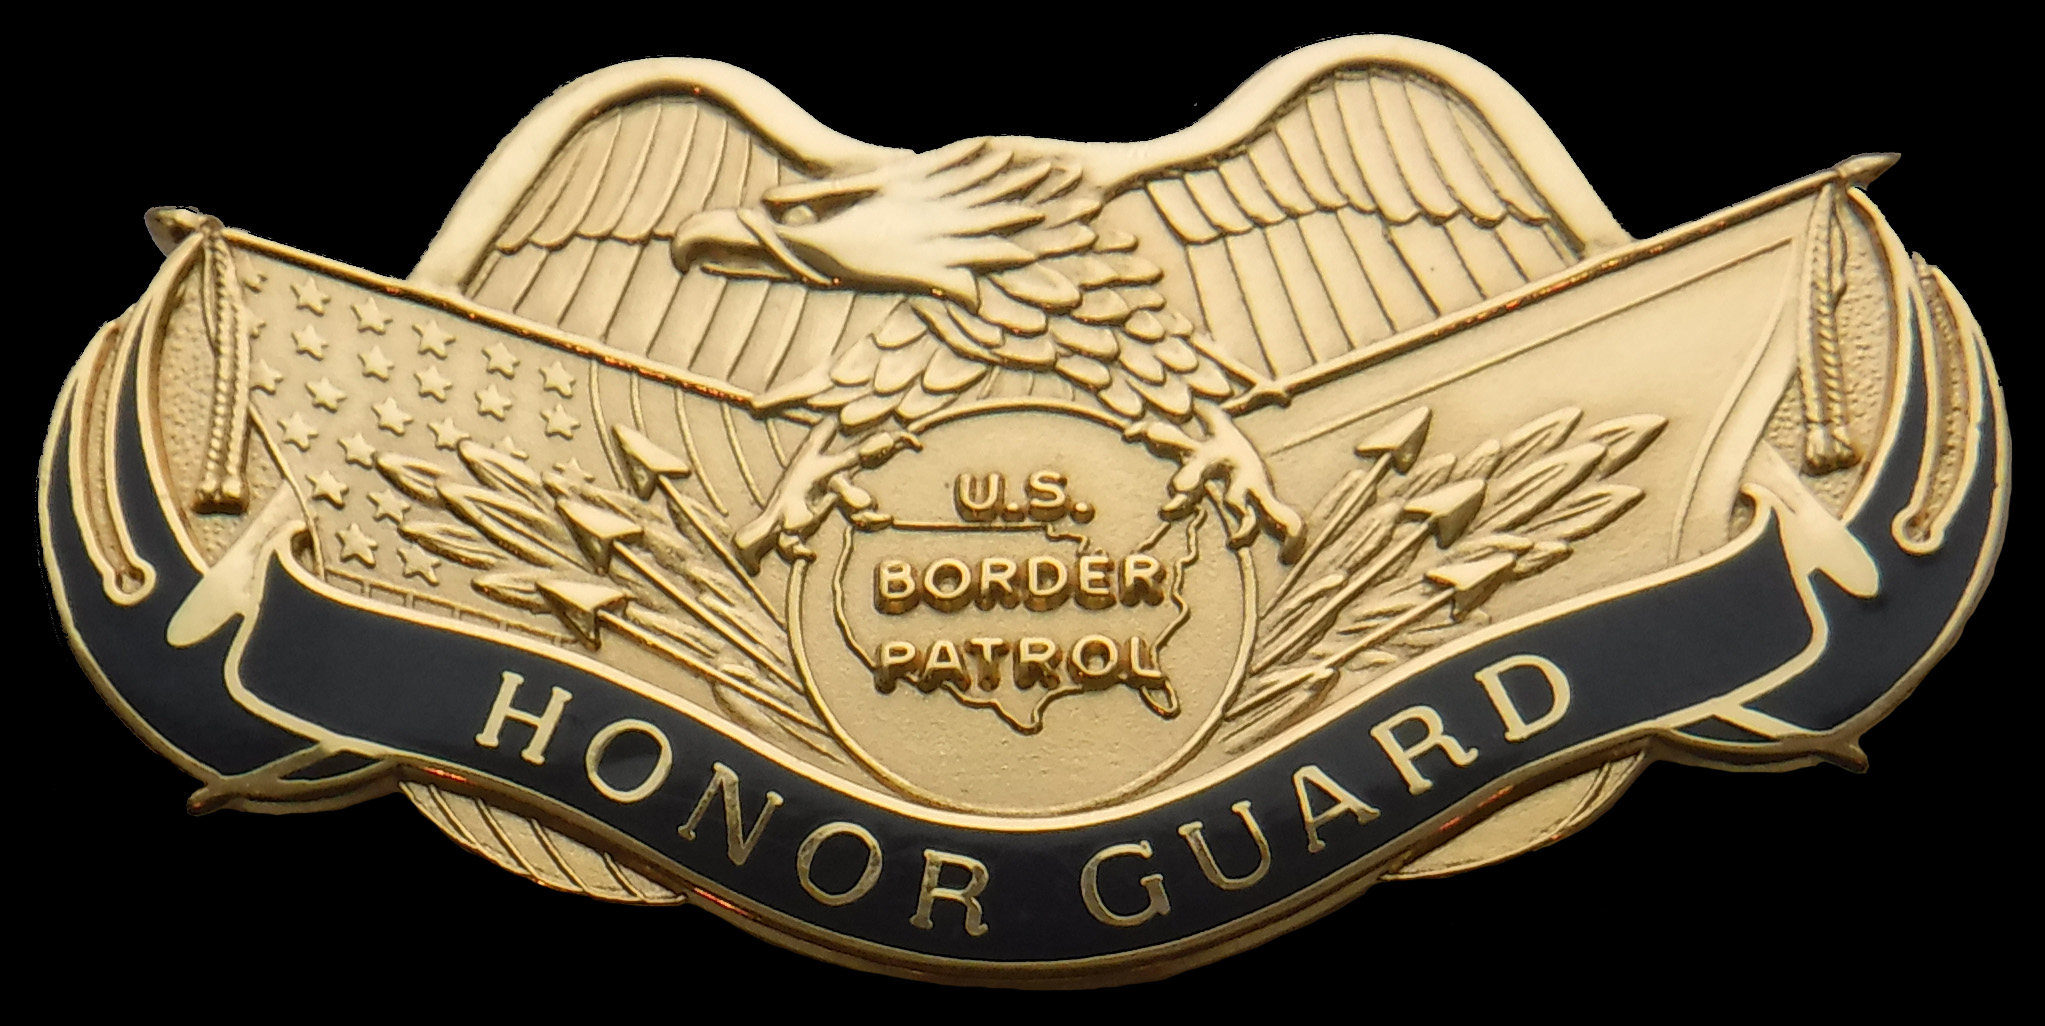 U.S. Border Patrol Honor Guard Qualification Device - large